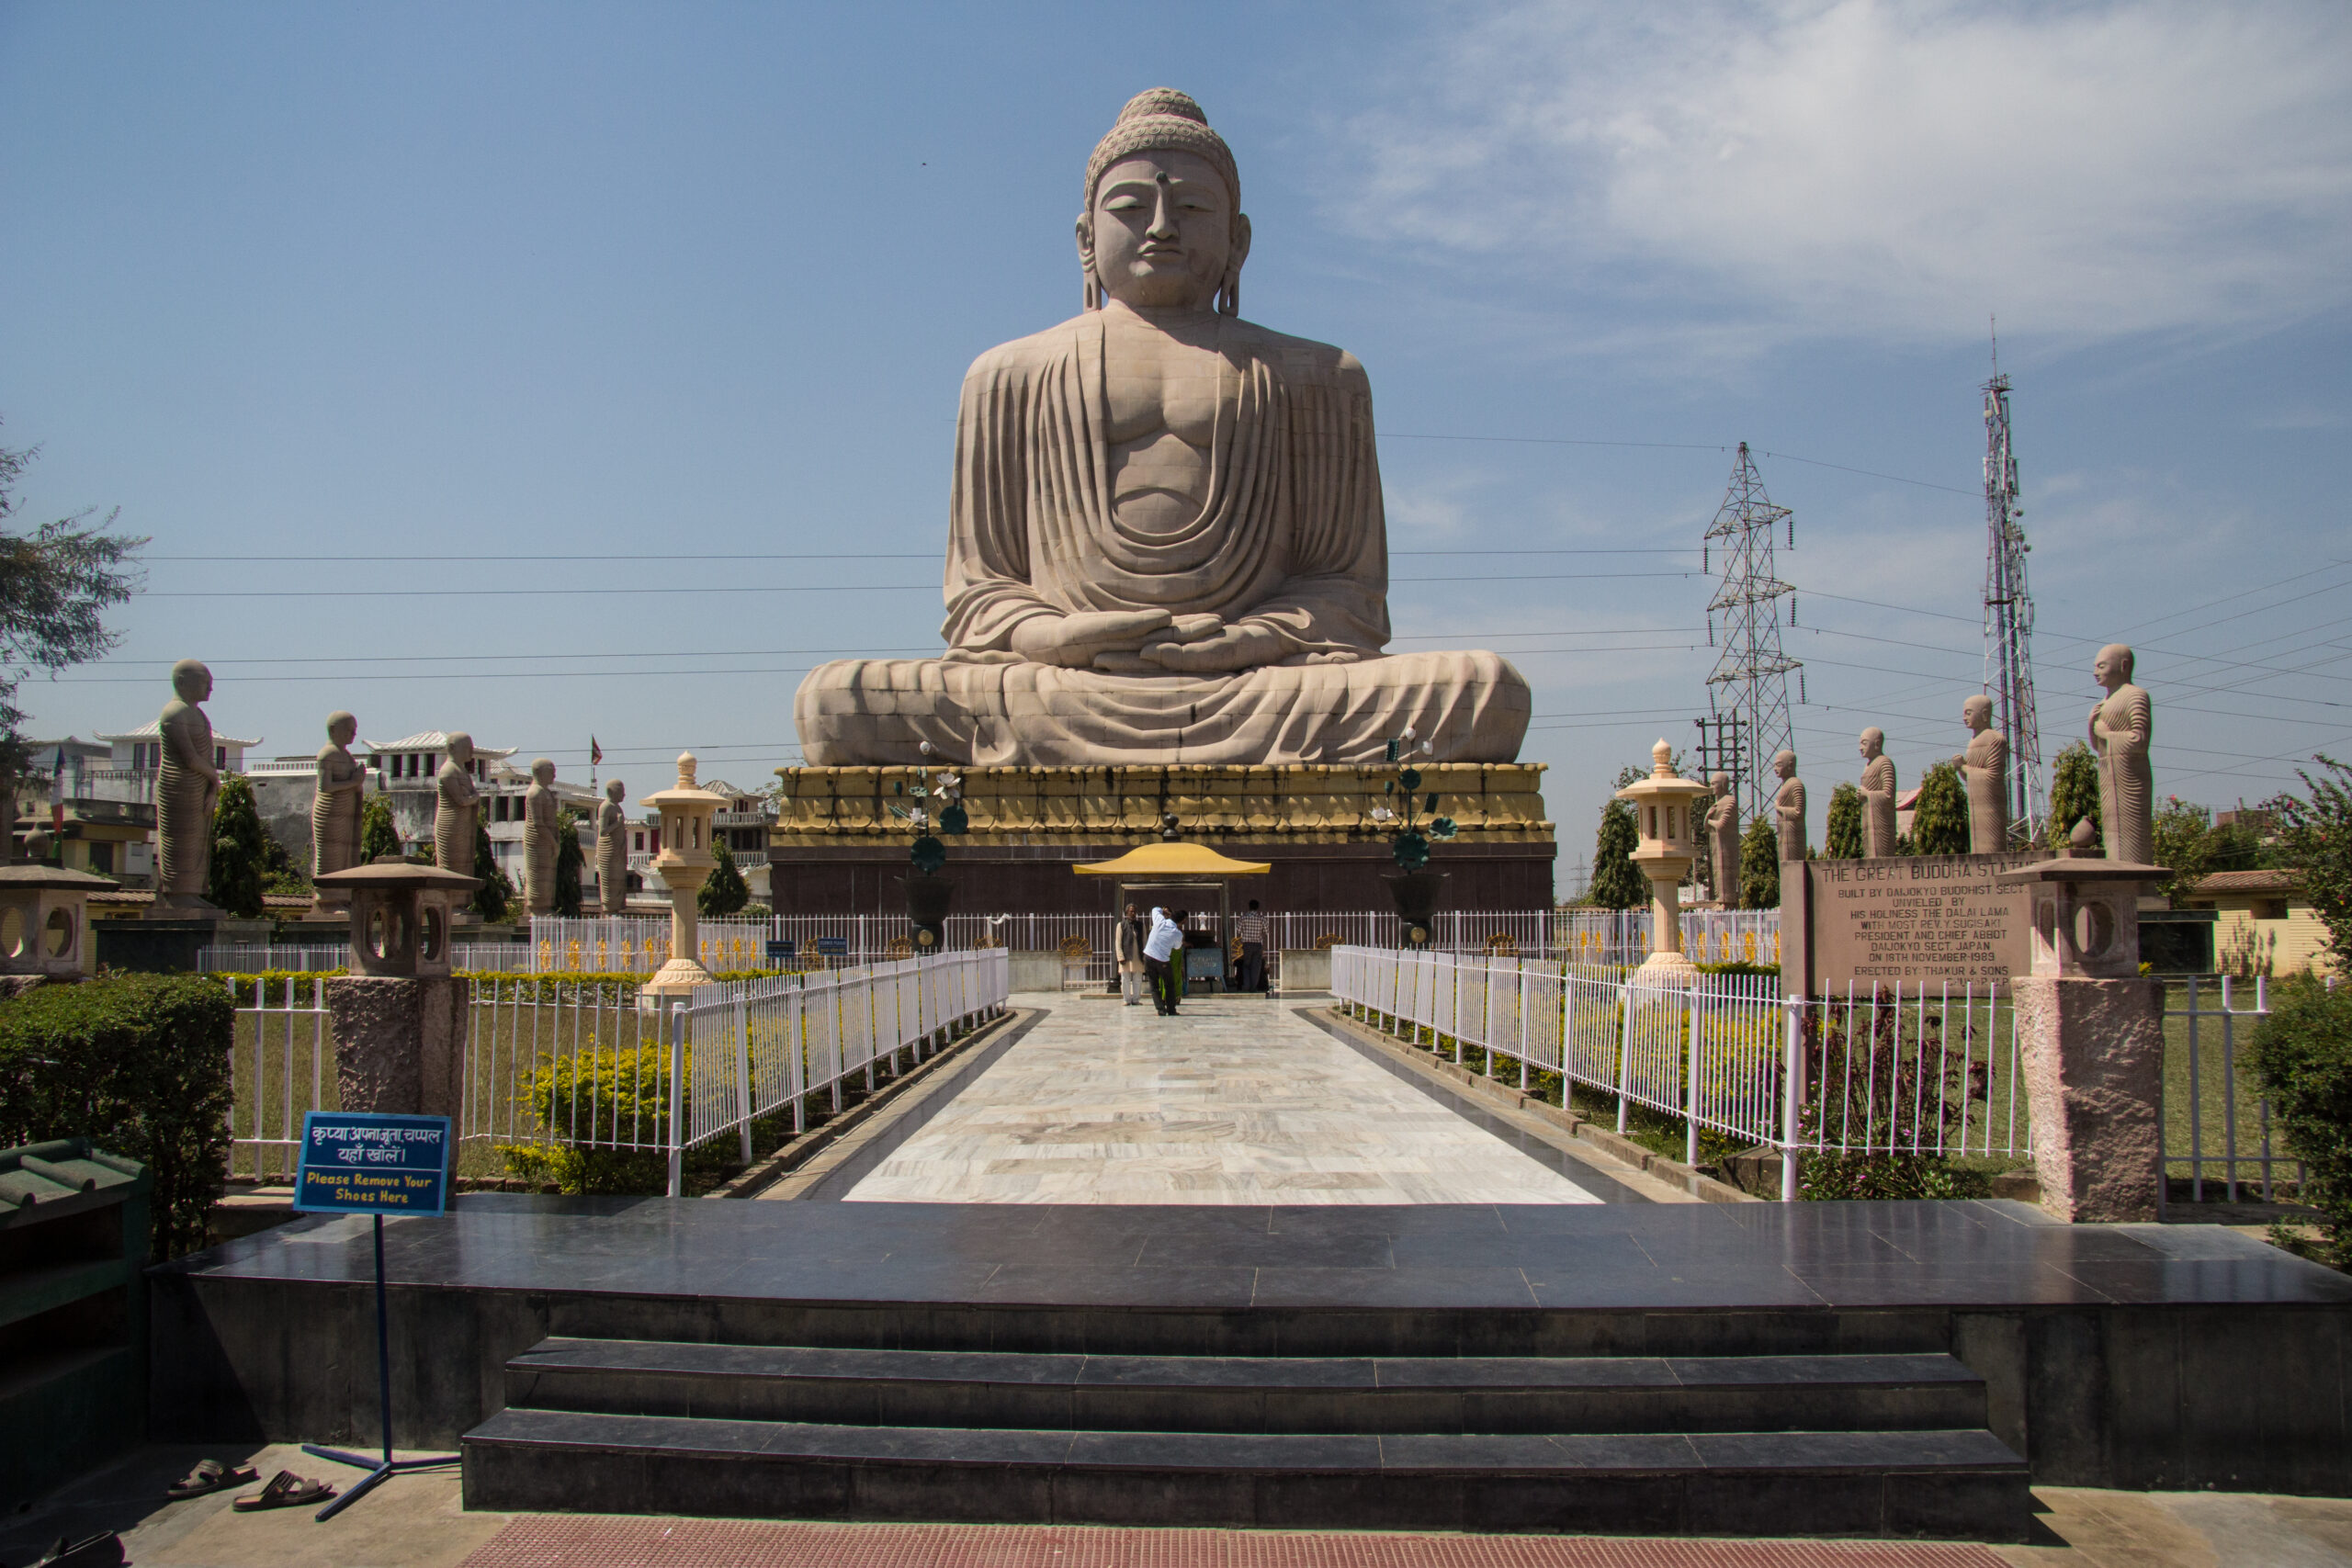 Wisata Sejarah 10 Tempat Umat Buddha di Regili, Wajib Sobat Kunjungi deh Guys!